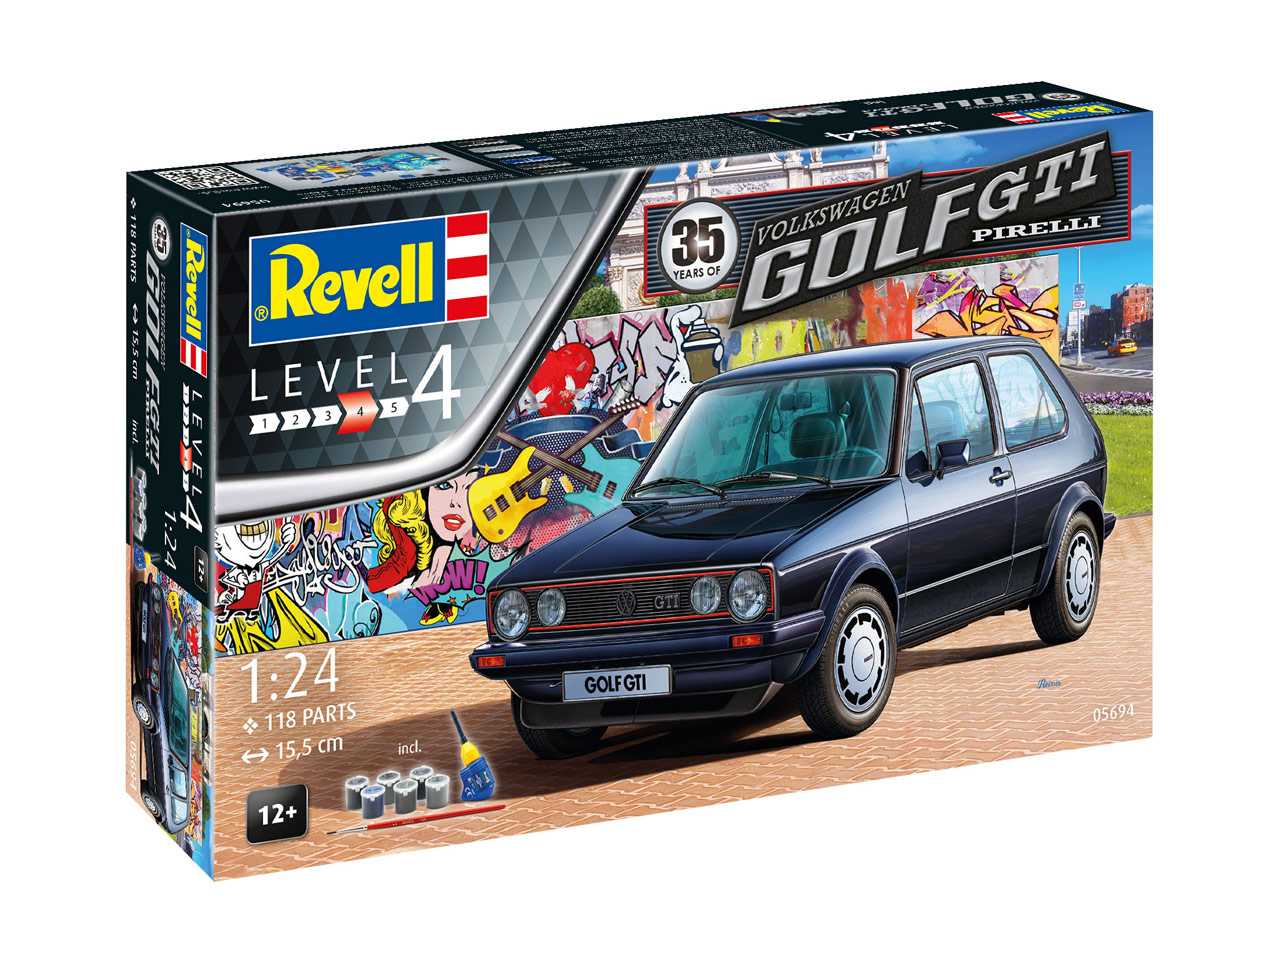 Fotografie Gift-Set auto 05694 - 35 Years VW Golf 1 GTi Pirelli (1:24)